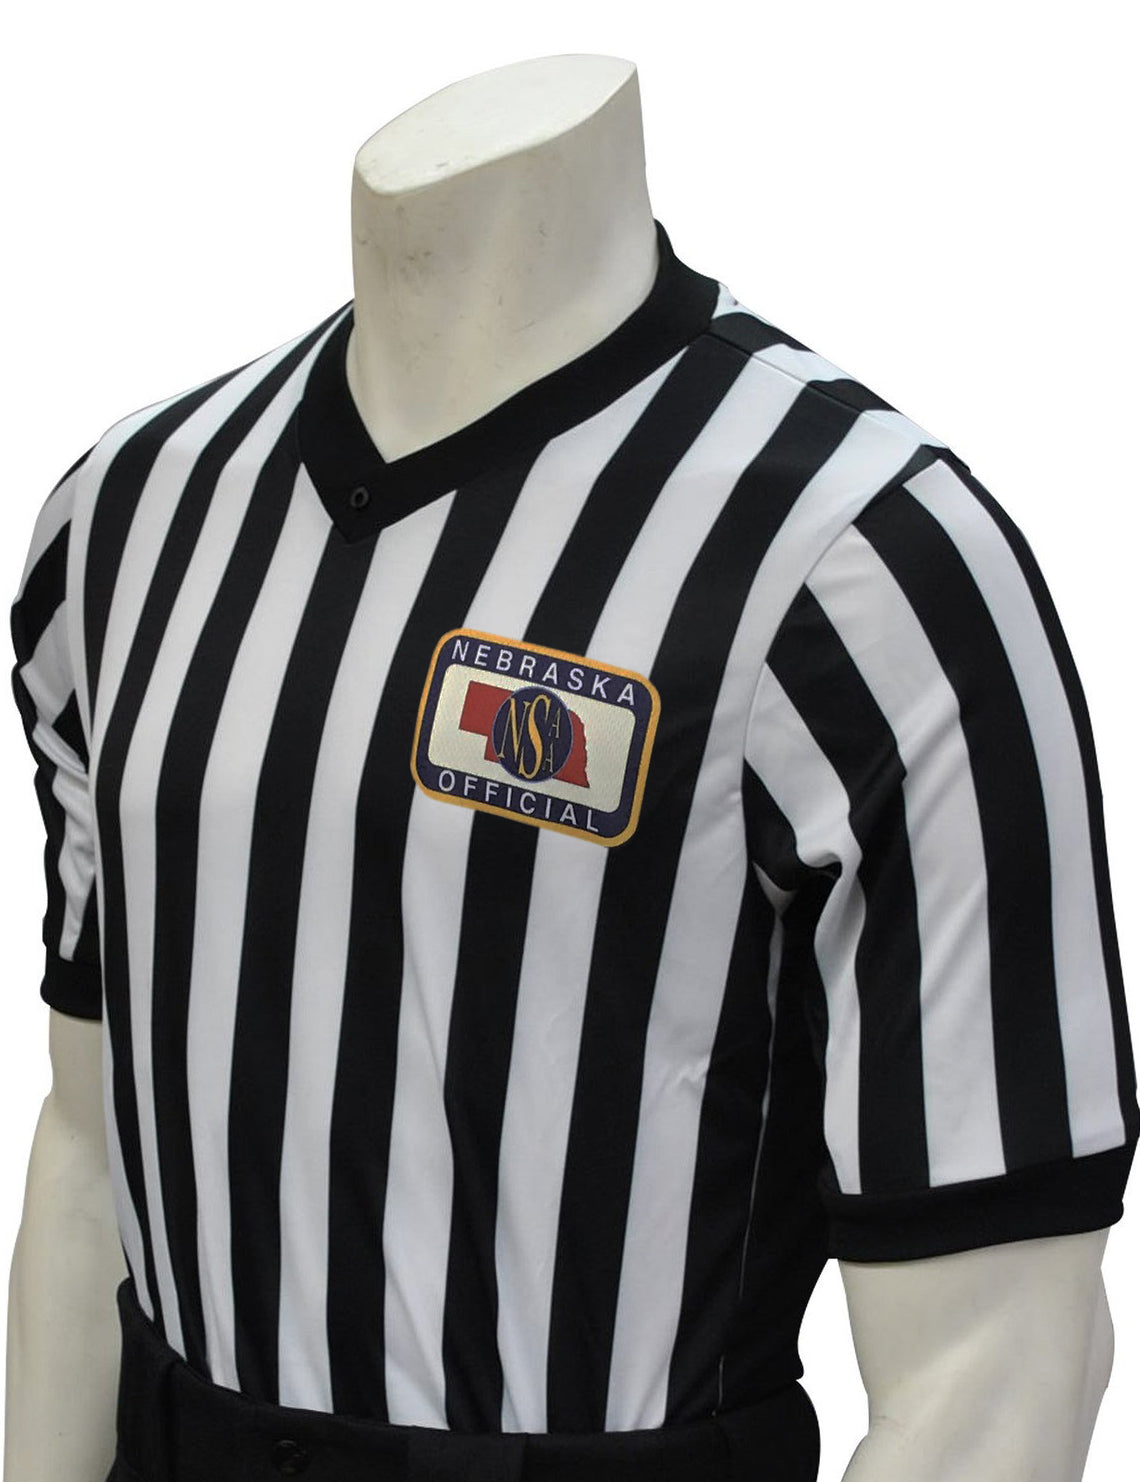 USA201NE-607 - Smitty "Made in USA" - "BODY FLEX" Basketball Men's Short Sleeve Shirt